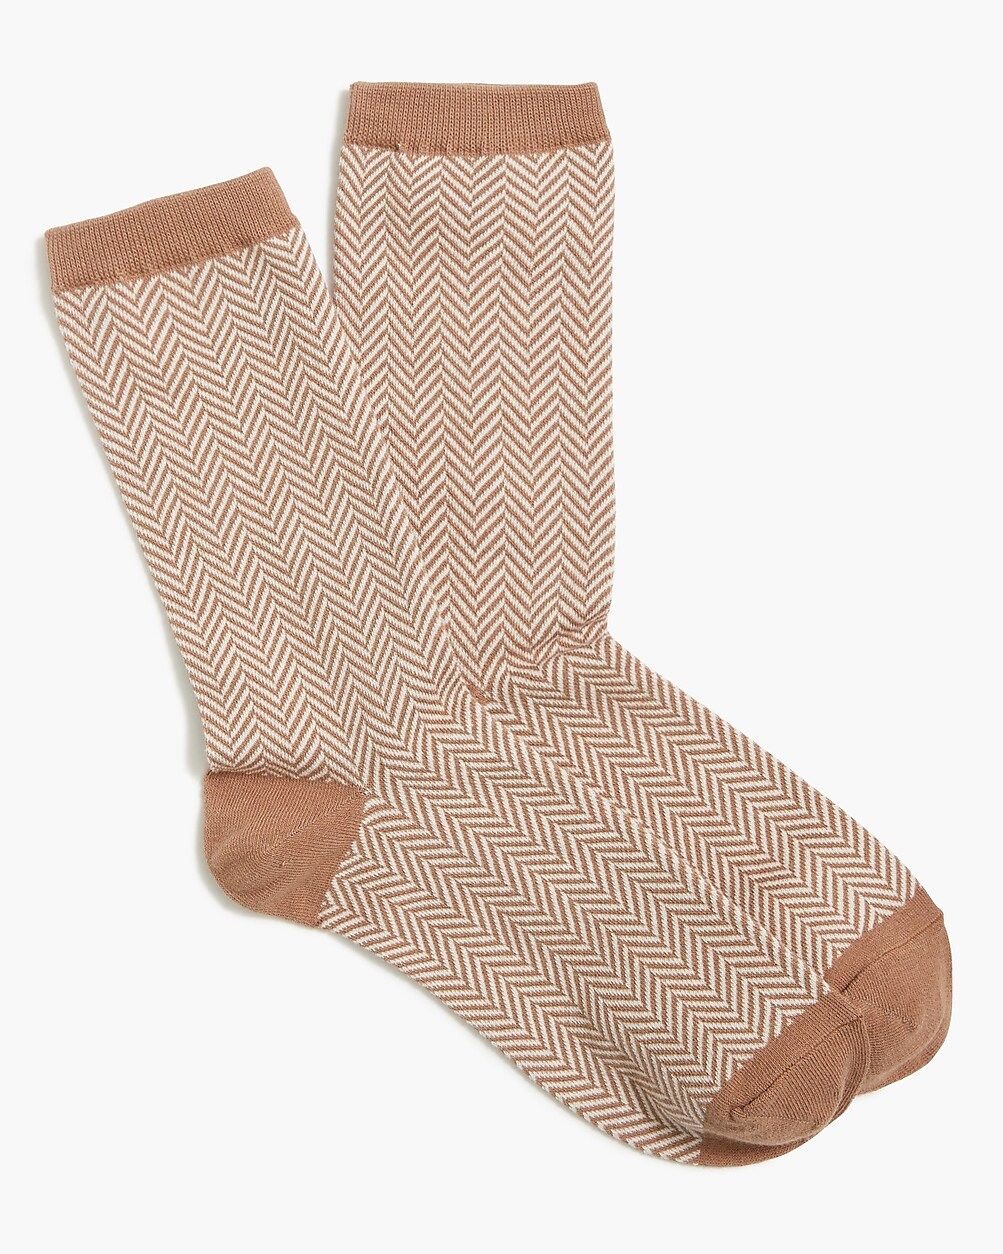 Herringbone trouser socks | J.Crew Factory